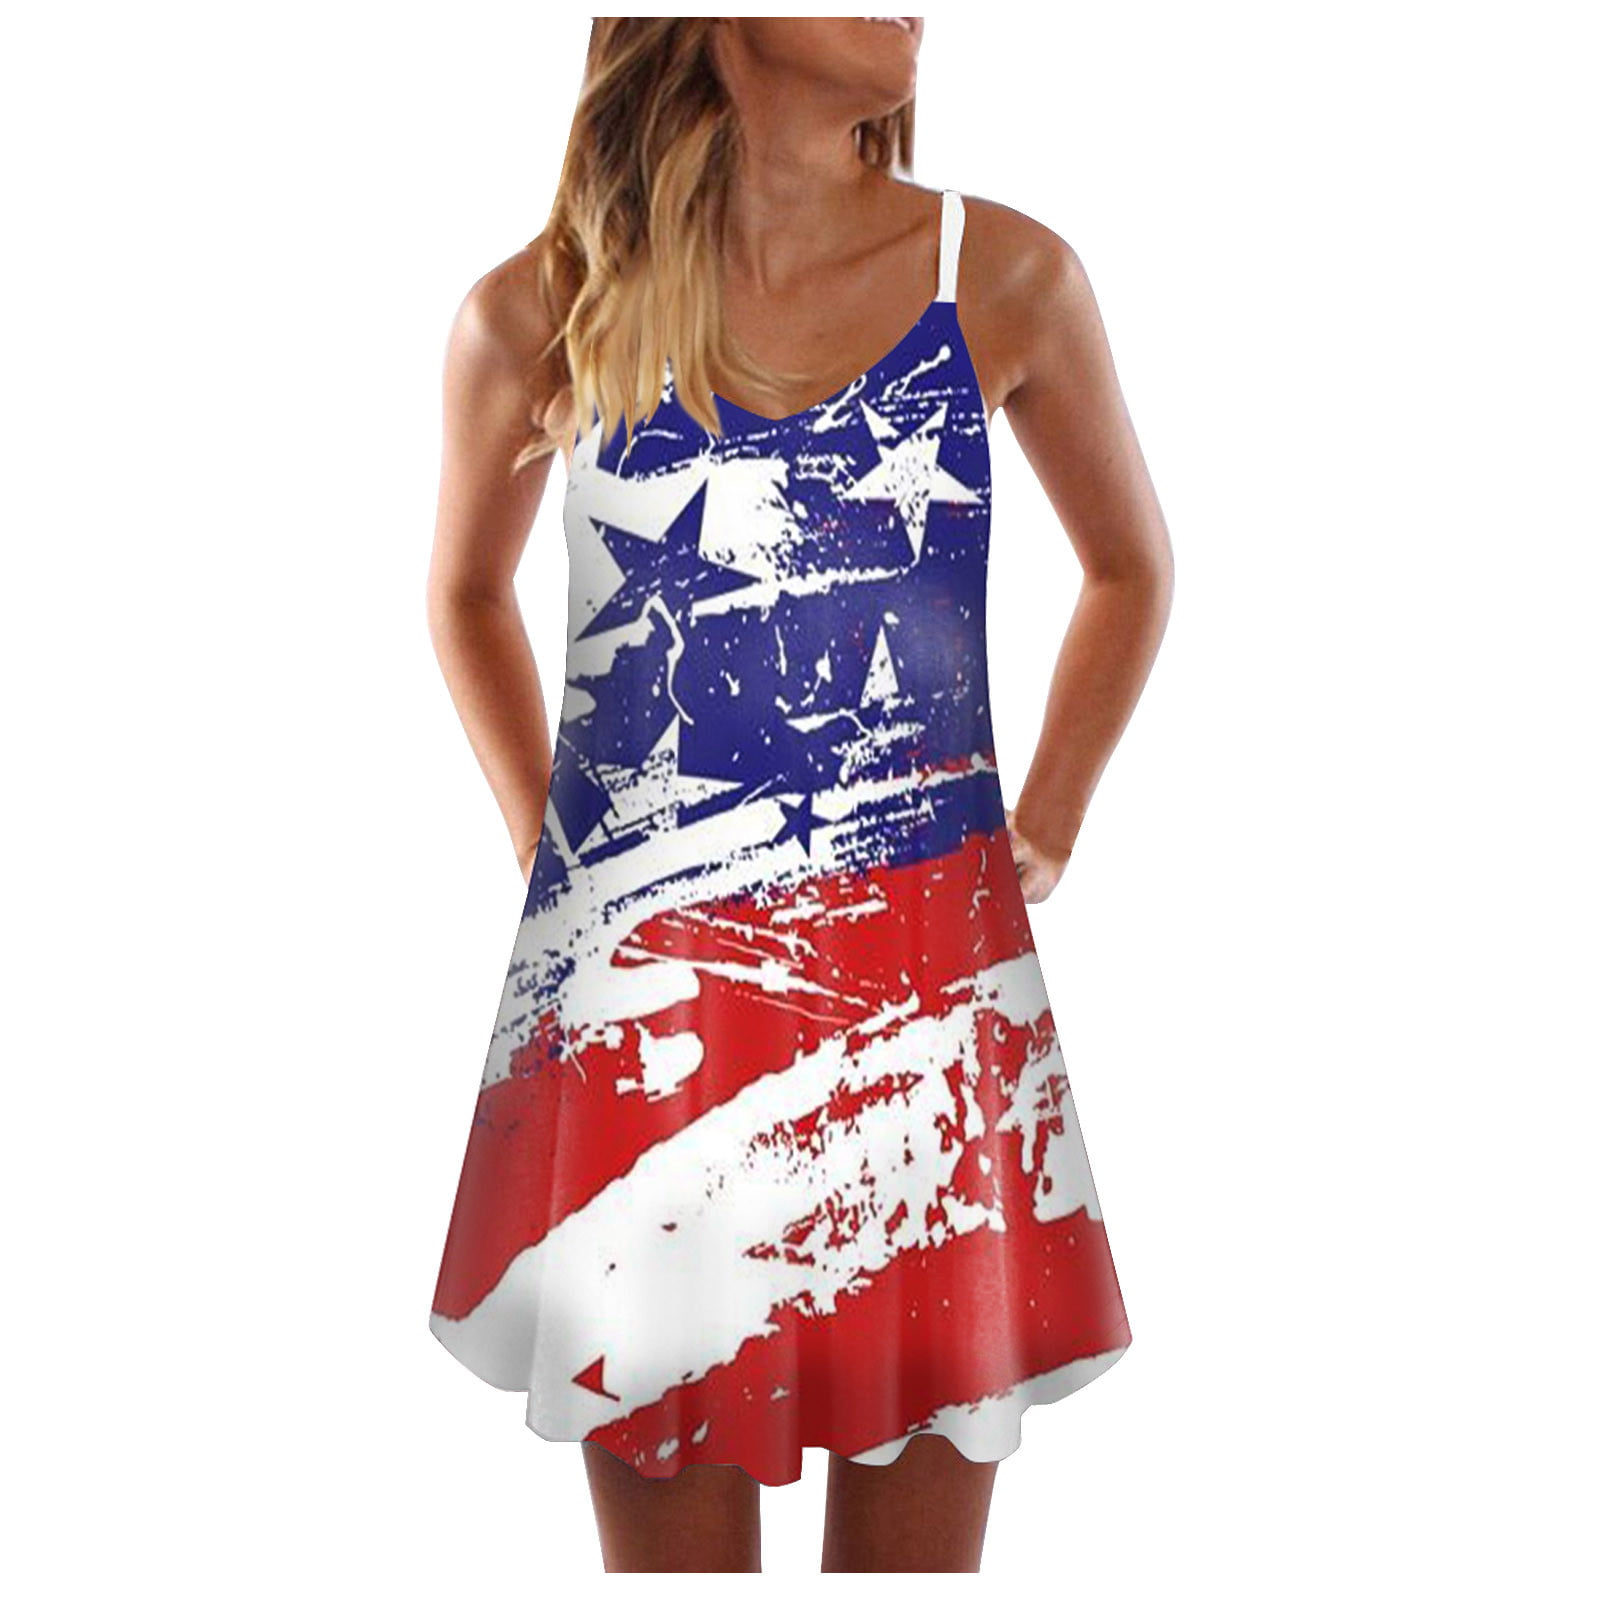 Woman Backless dress Stars Stripes USA Flag Printed Spaghetti straps dress S-XL